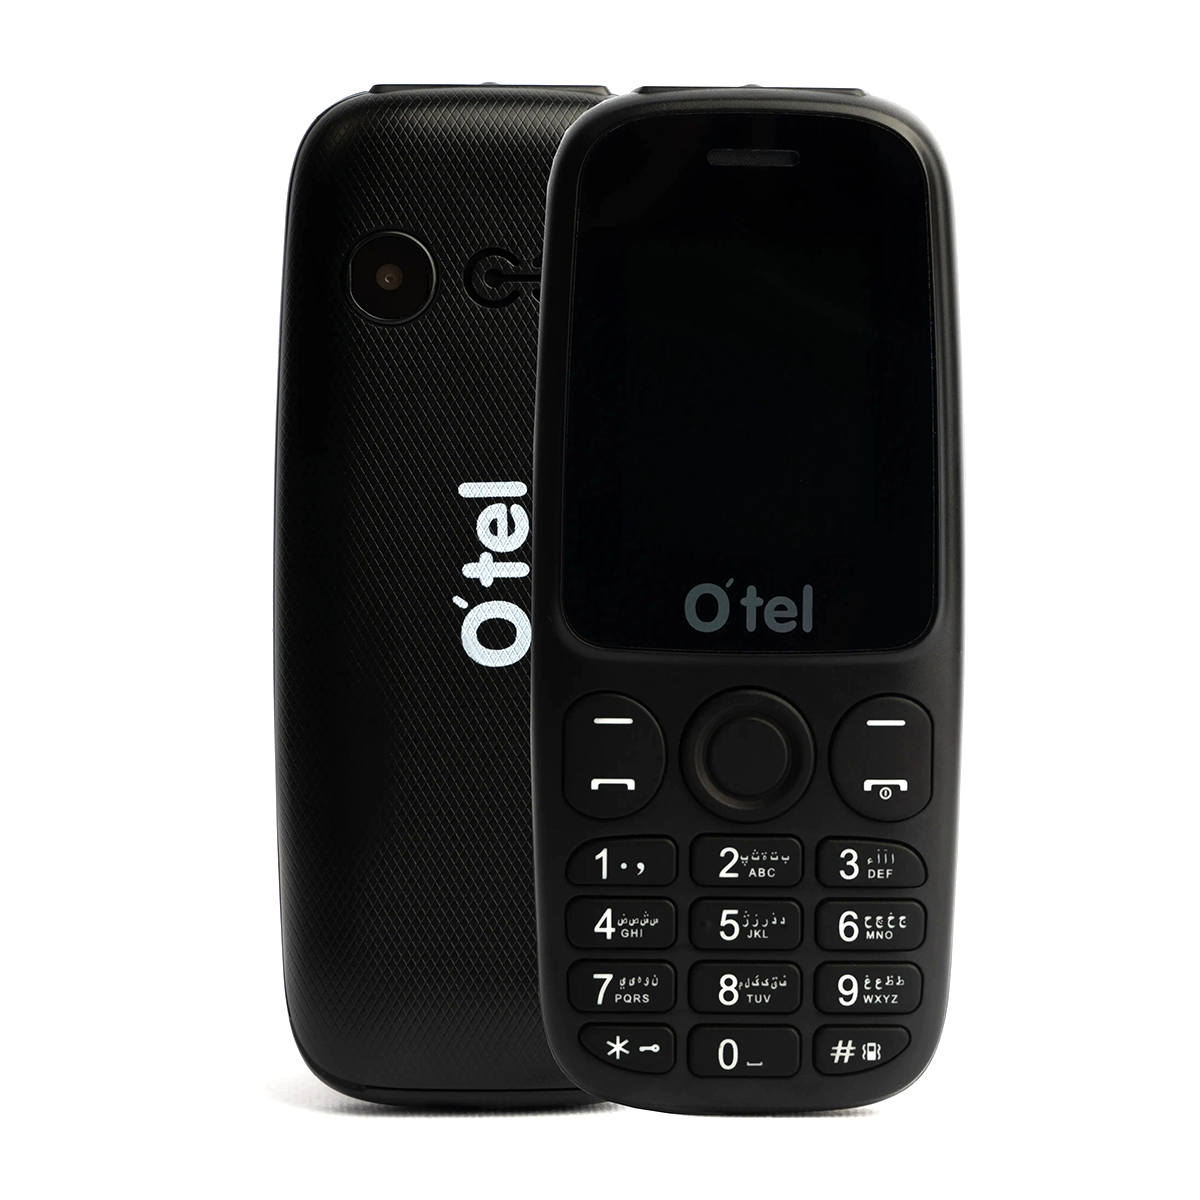 گوشی موبایل اوتل مدل F05c دو سیم کارت